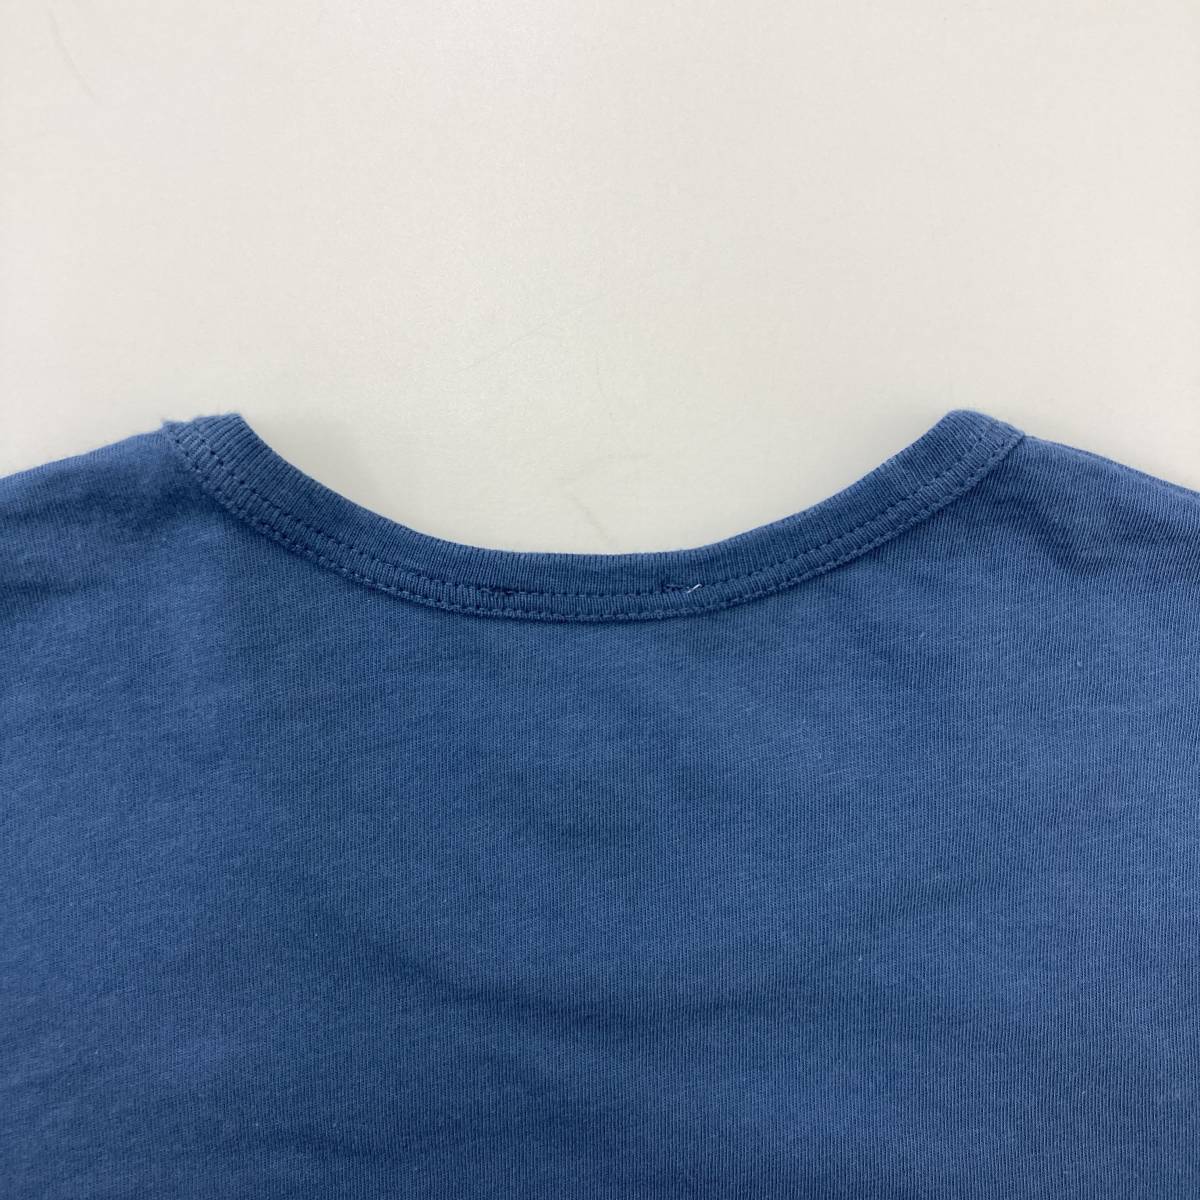  редкость Vivienne Westwood GOLD LABEL футболка Италия производства голубой XS размер Gold этикетка трикотаж с коротким рукавом Tee archive 3080363